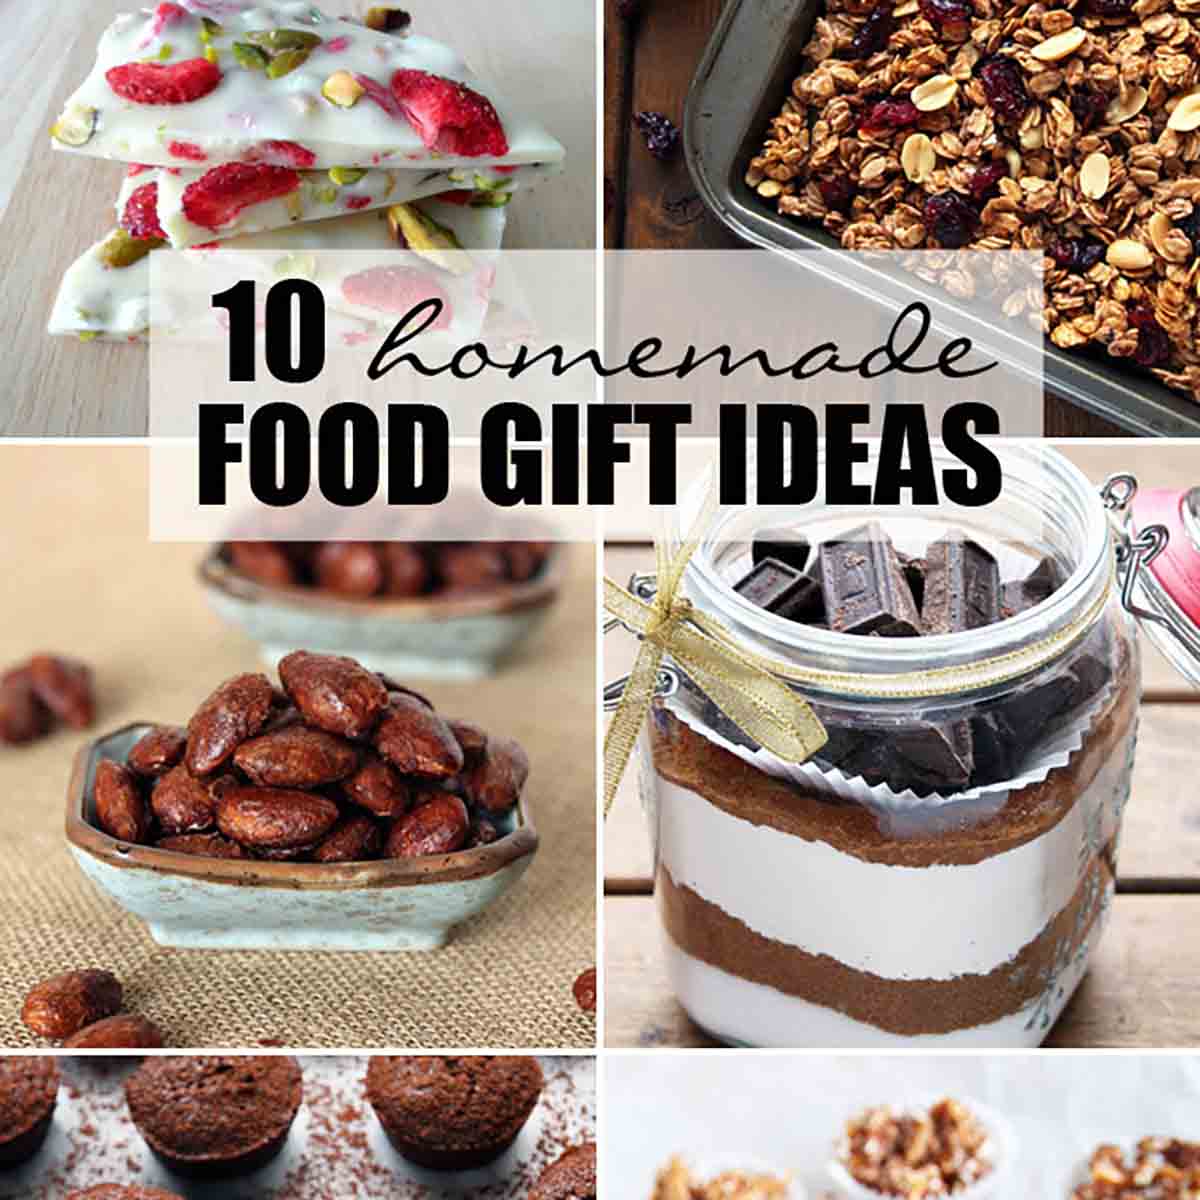 8 homemade food gifts to give this Christmas - marmalade & me